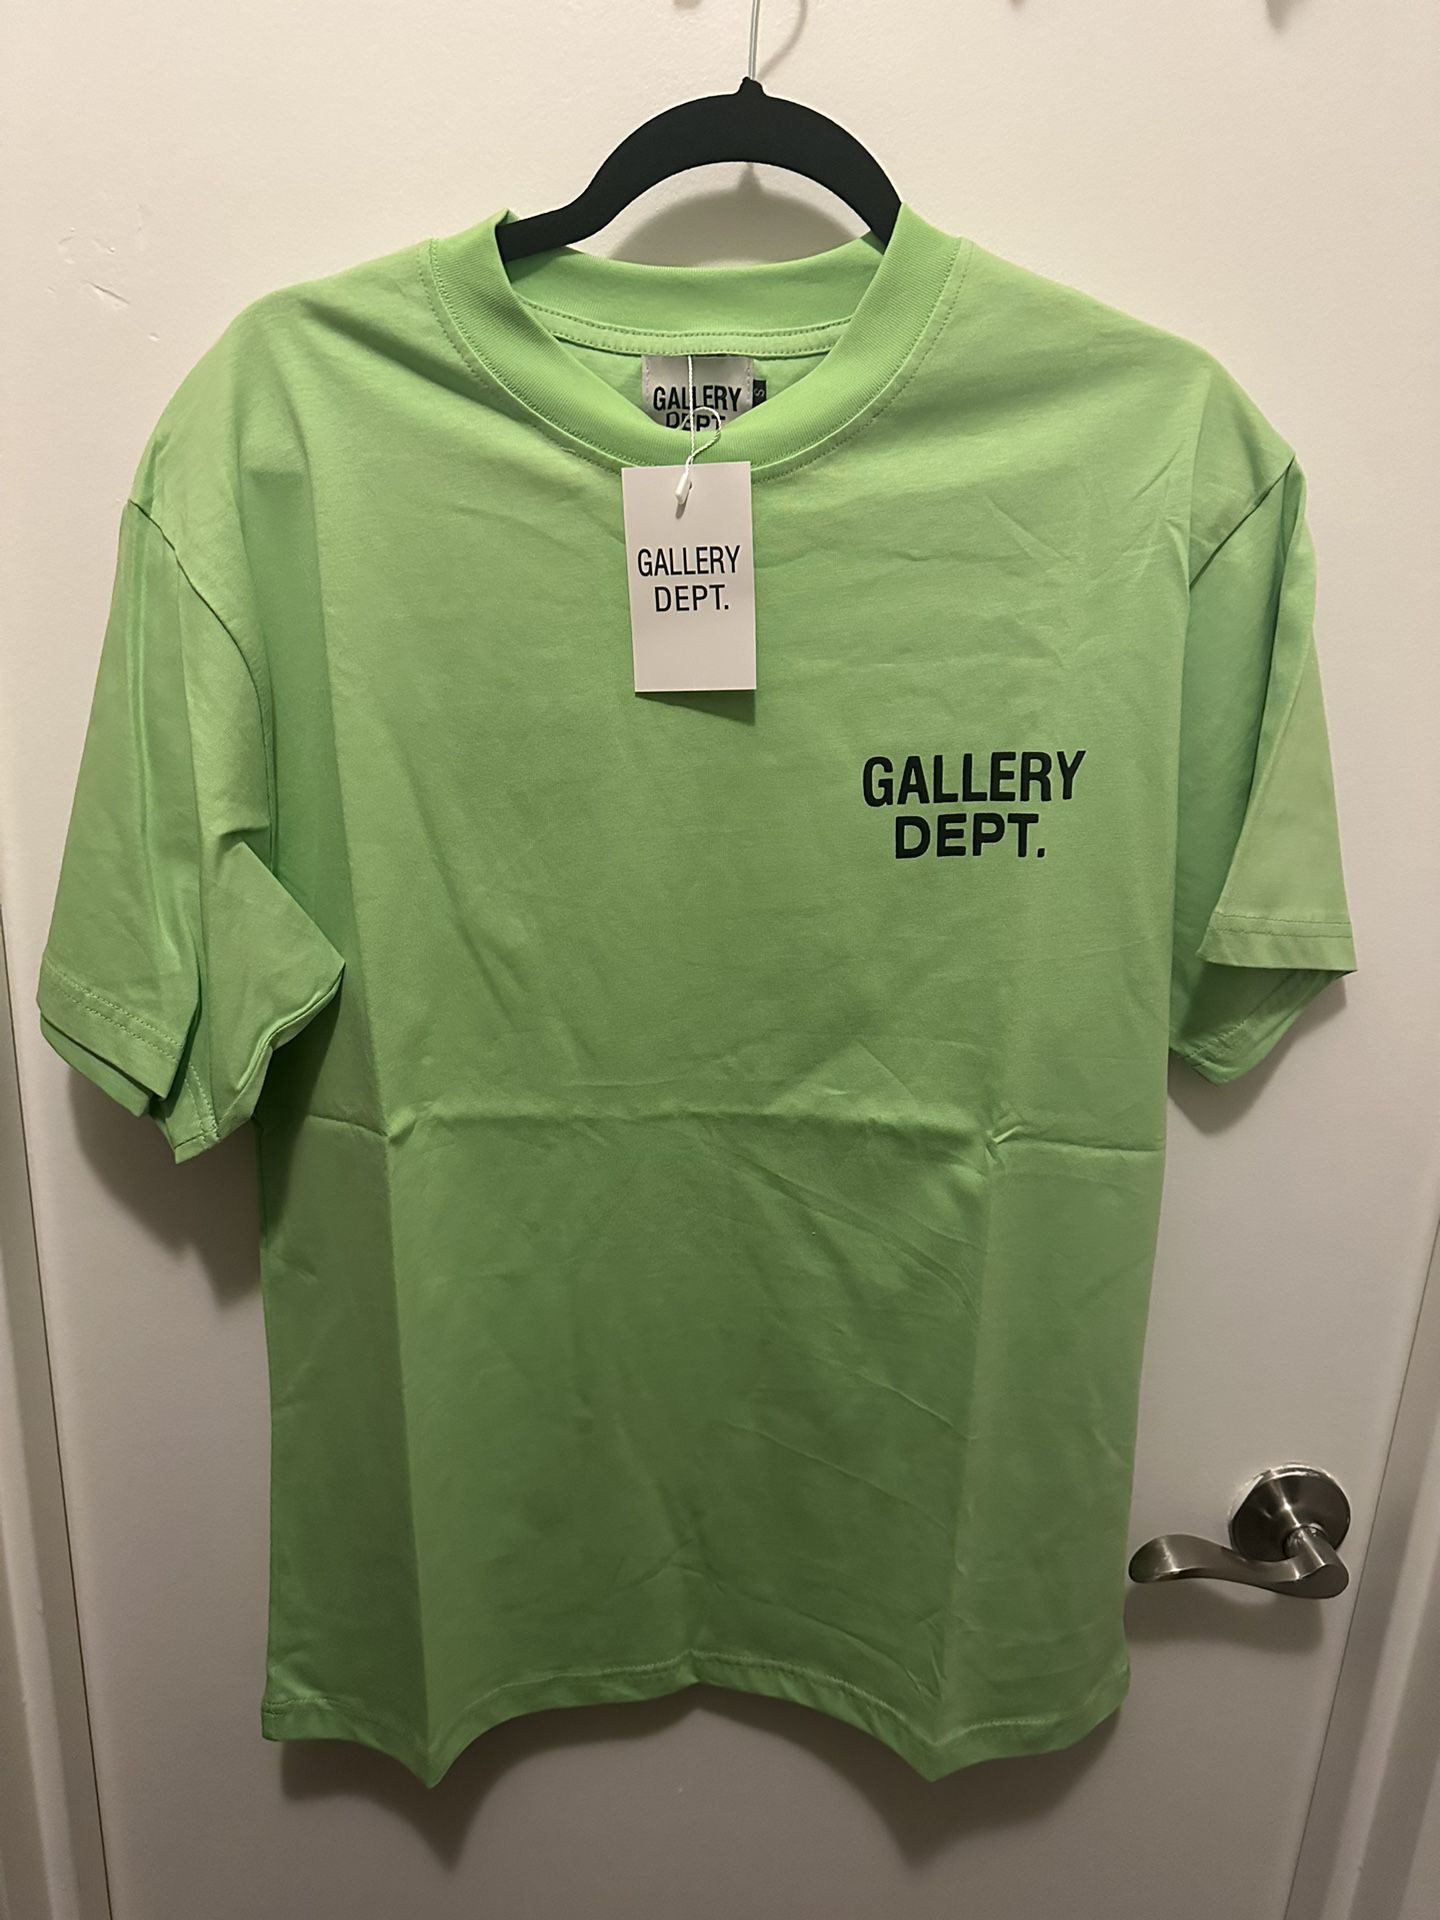 Gallery Dept Tshirt Slime Green Small